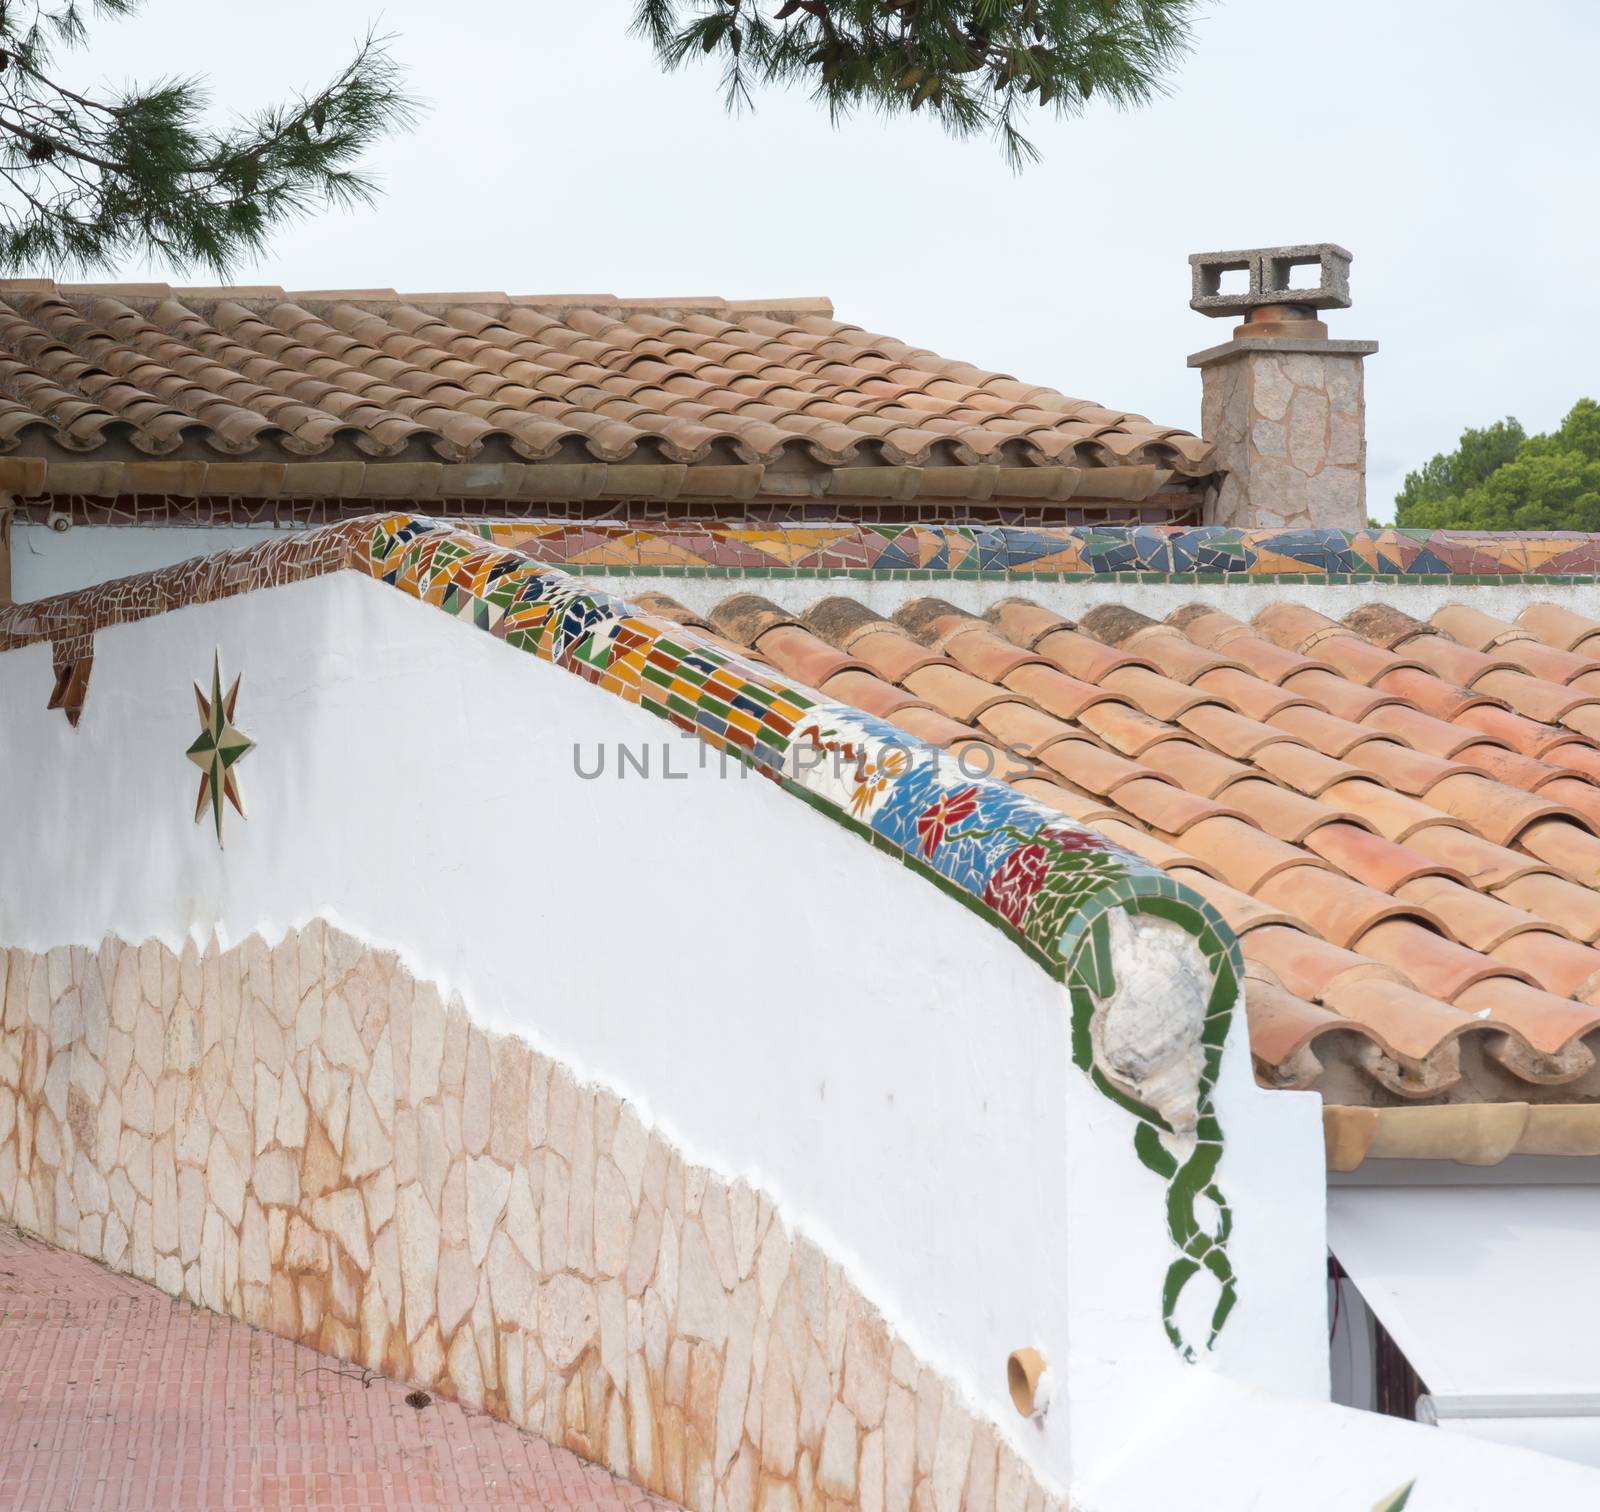 Mosaic decor on building. Mallorca, Balearic islands, Spain.